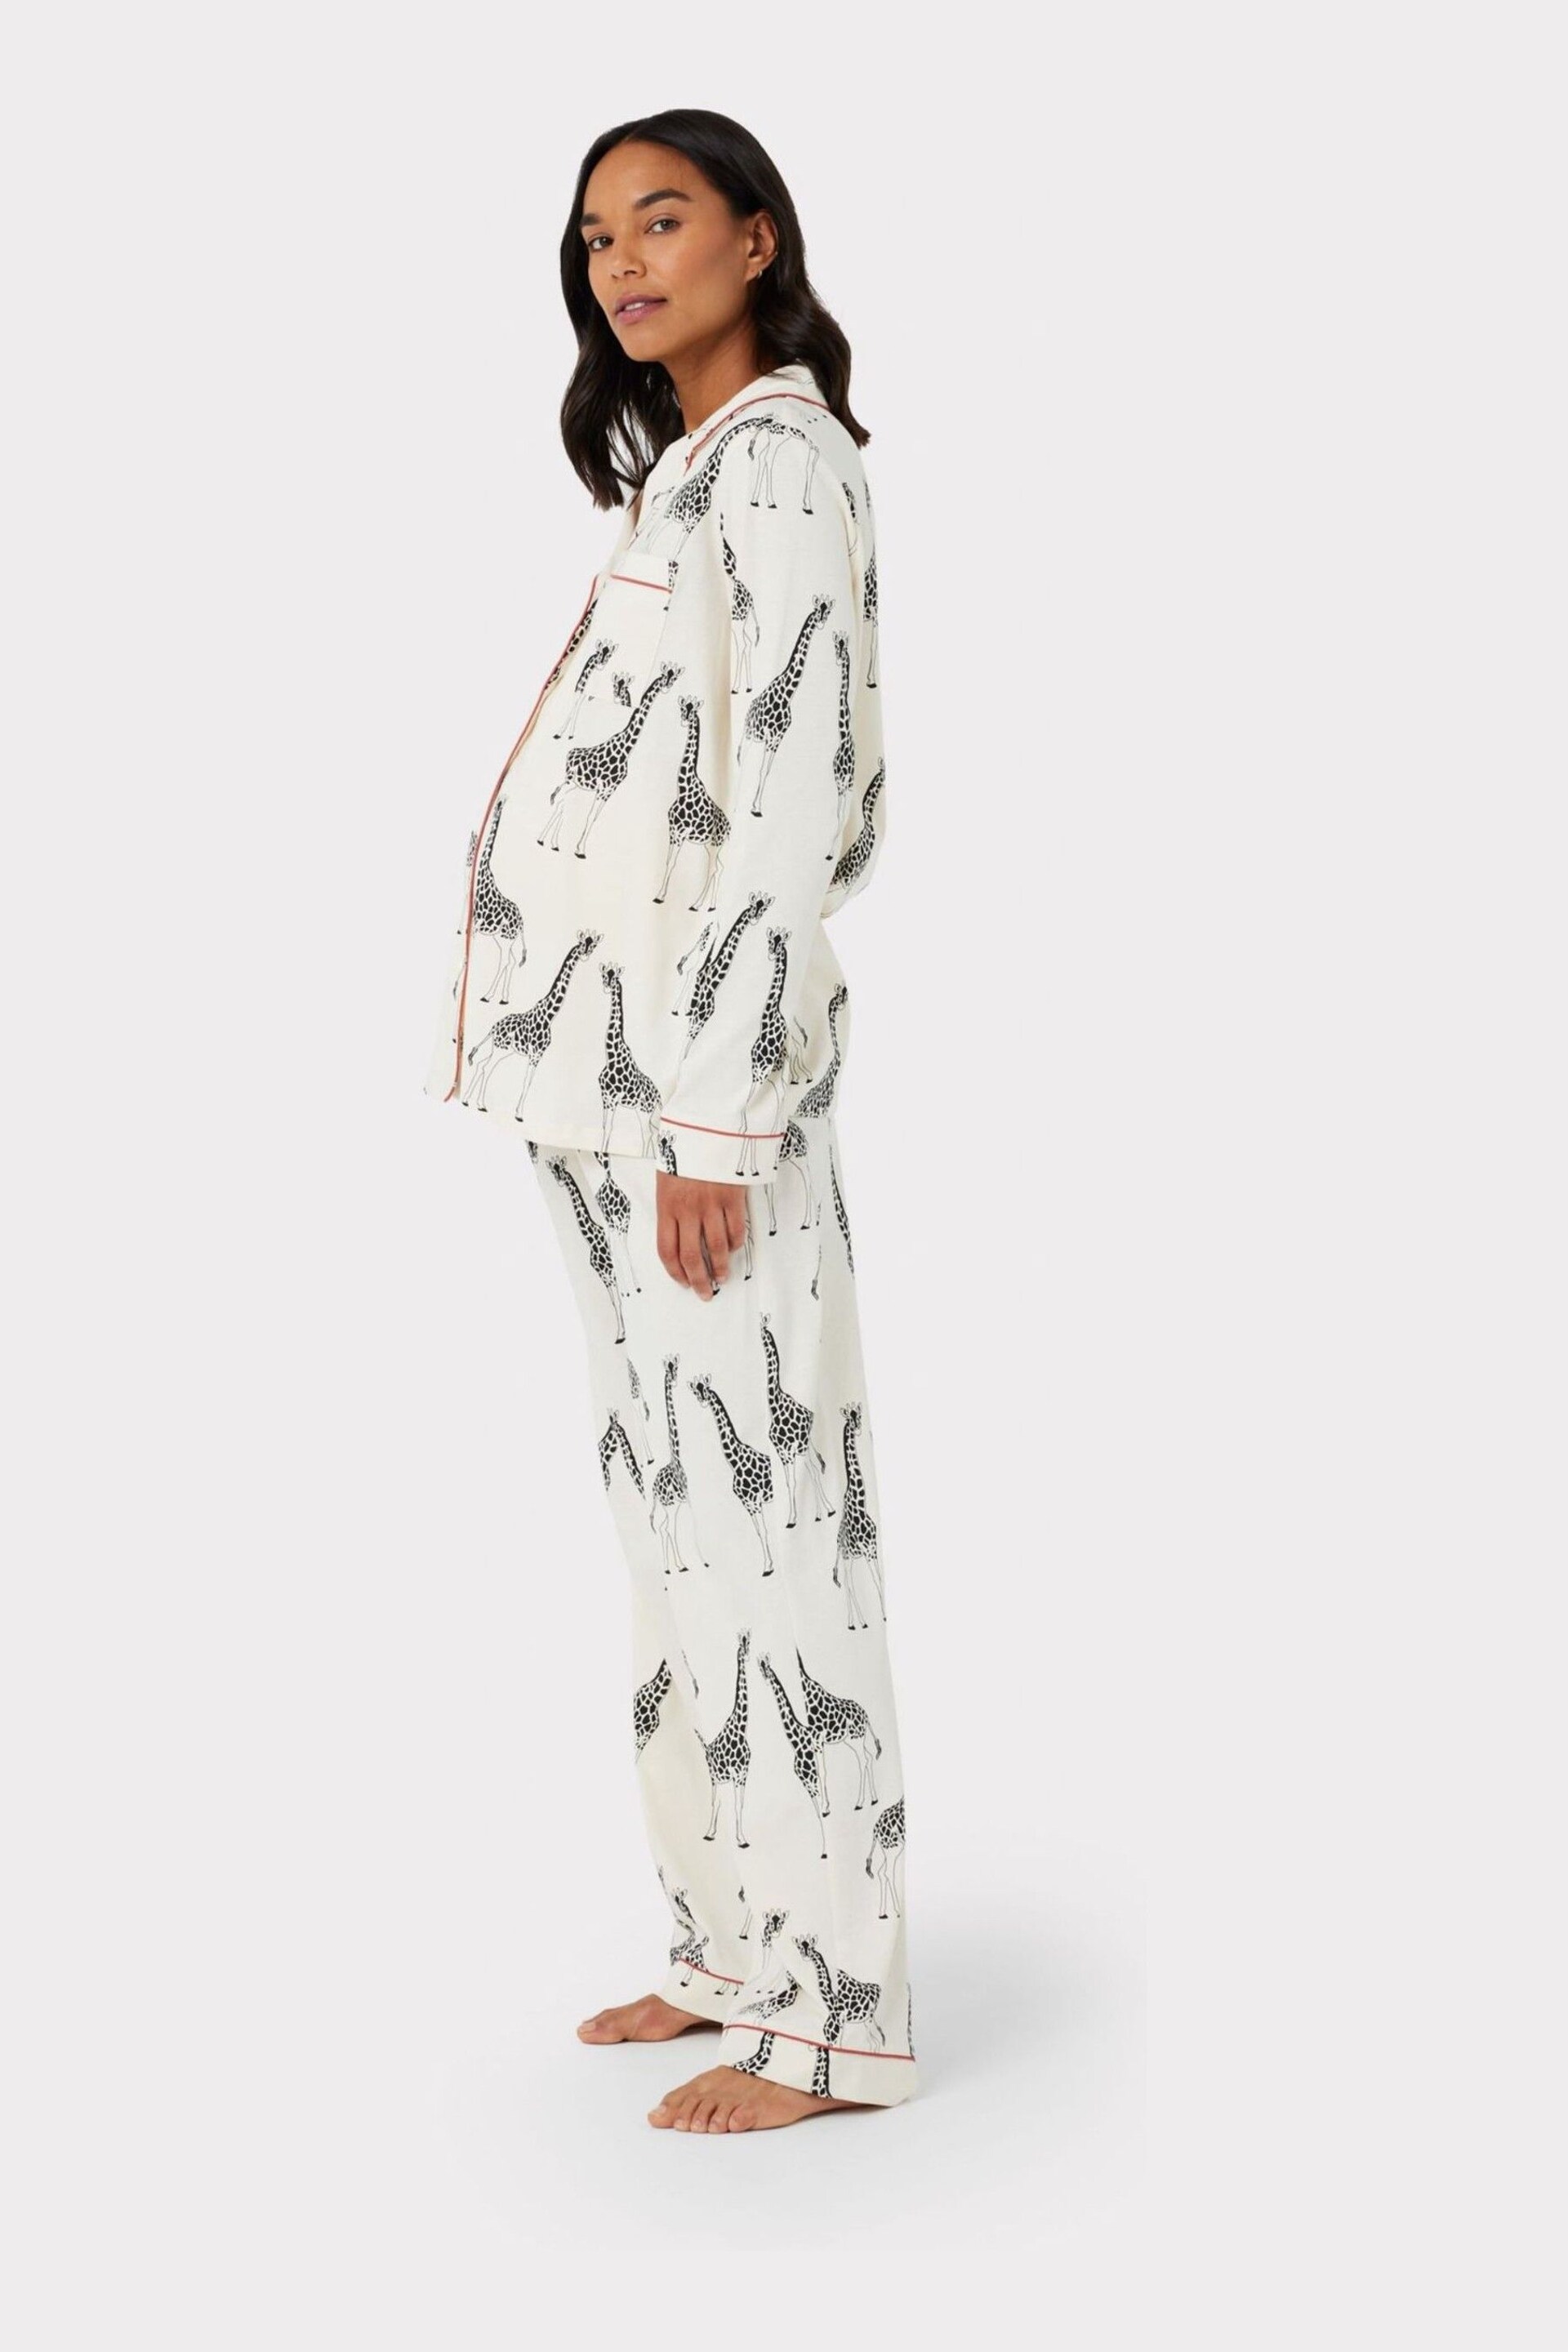 Chelsea Peers Cream Maternity Organic Cotton Giraffe Print Long Pyjama Set - Image 4 of 5